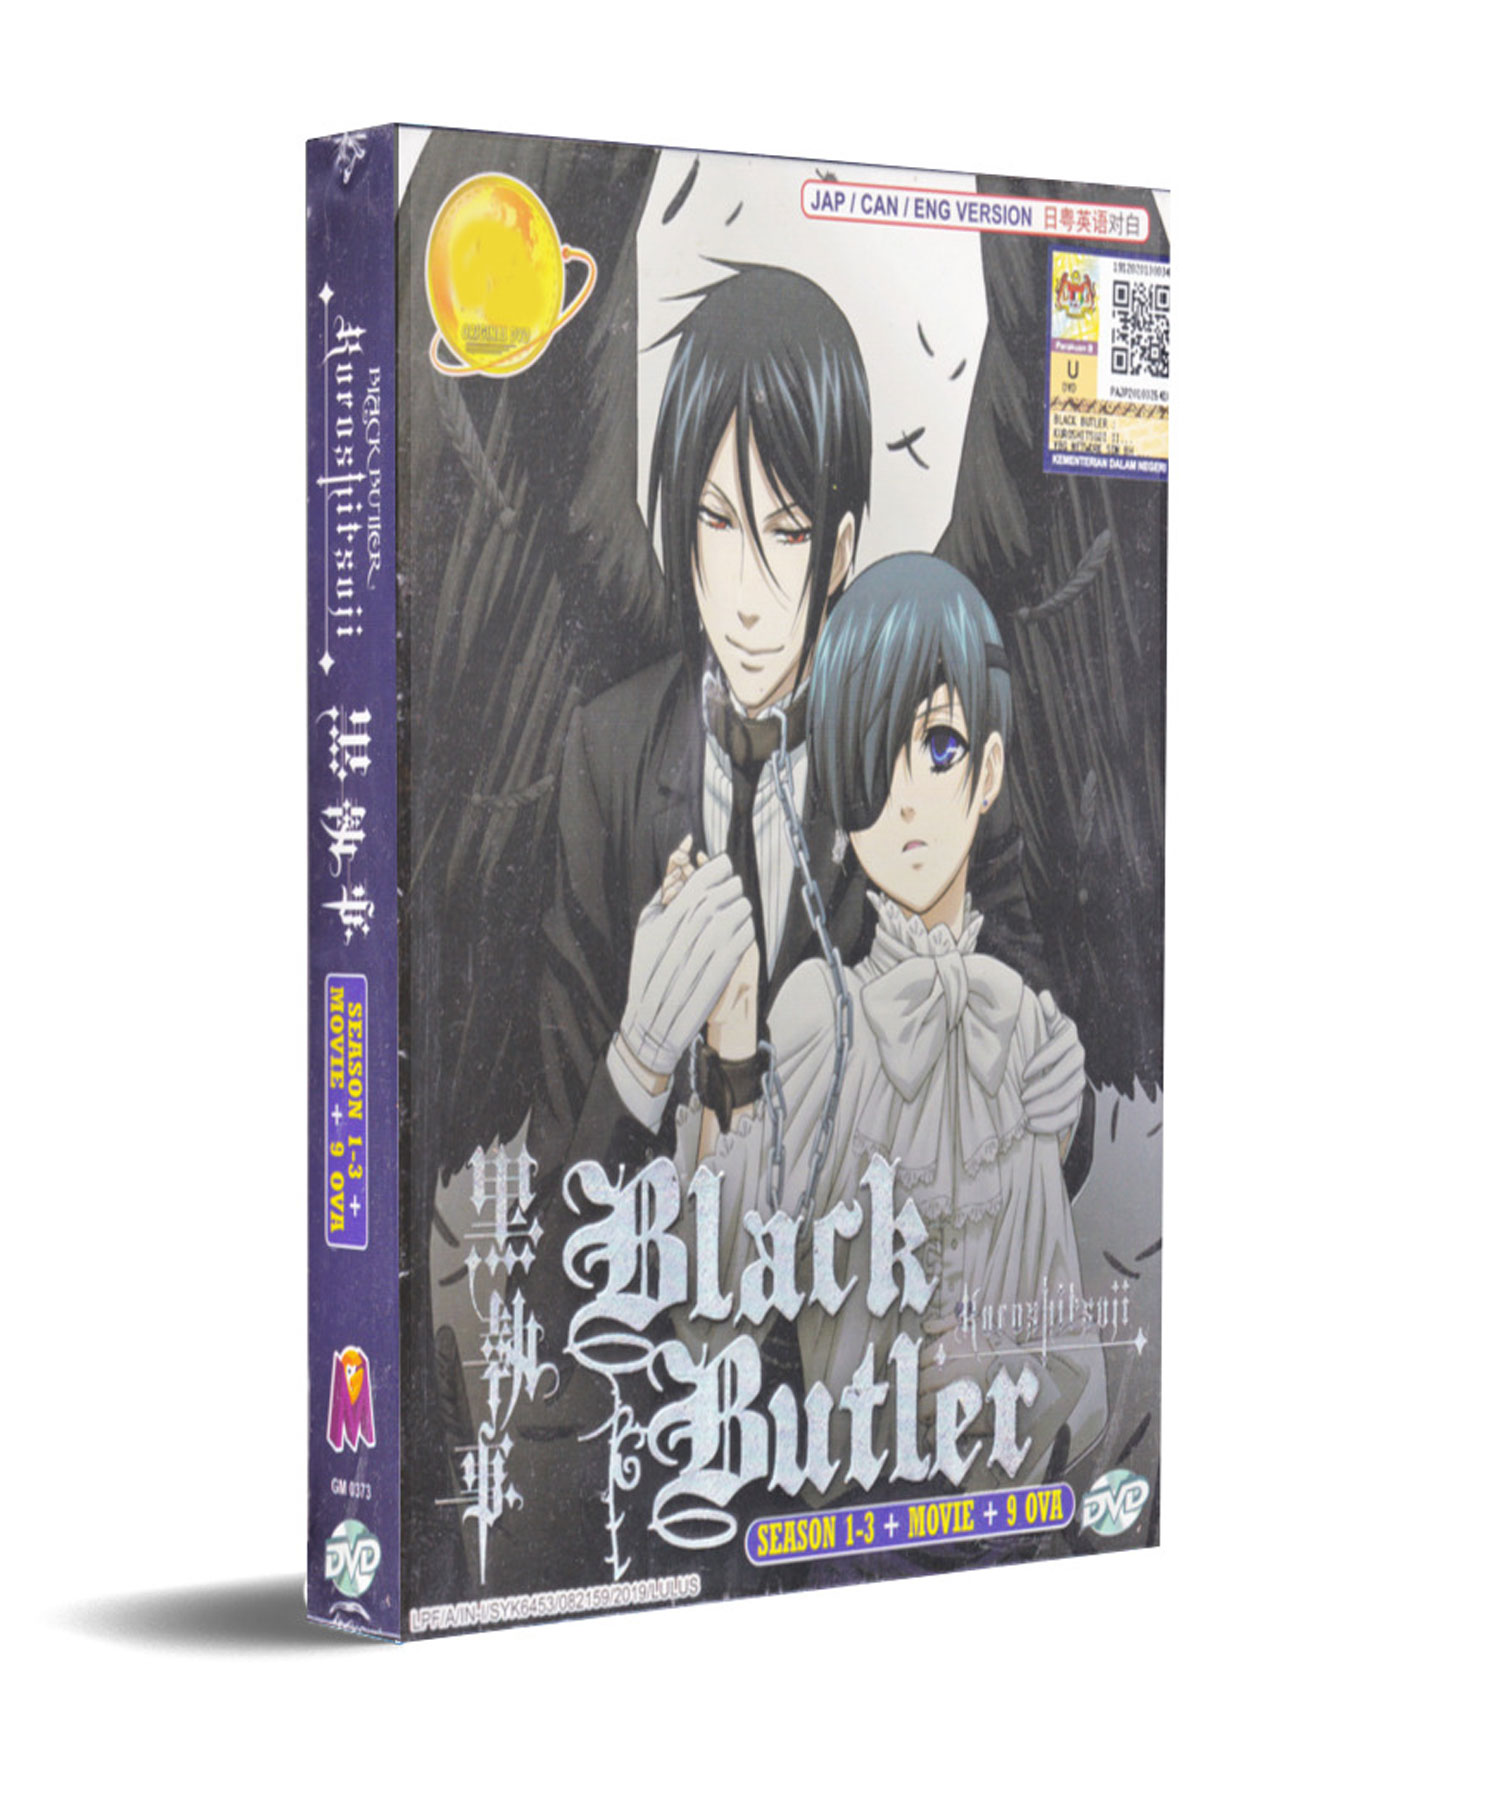 Black Butler- Kuroshitsuji (Season 1-3 + Movie + 9 OVA) (DVD) () Anime